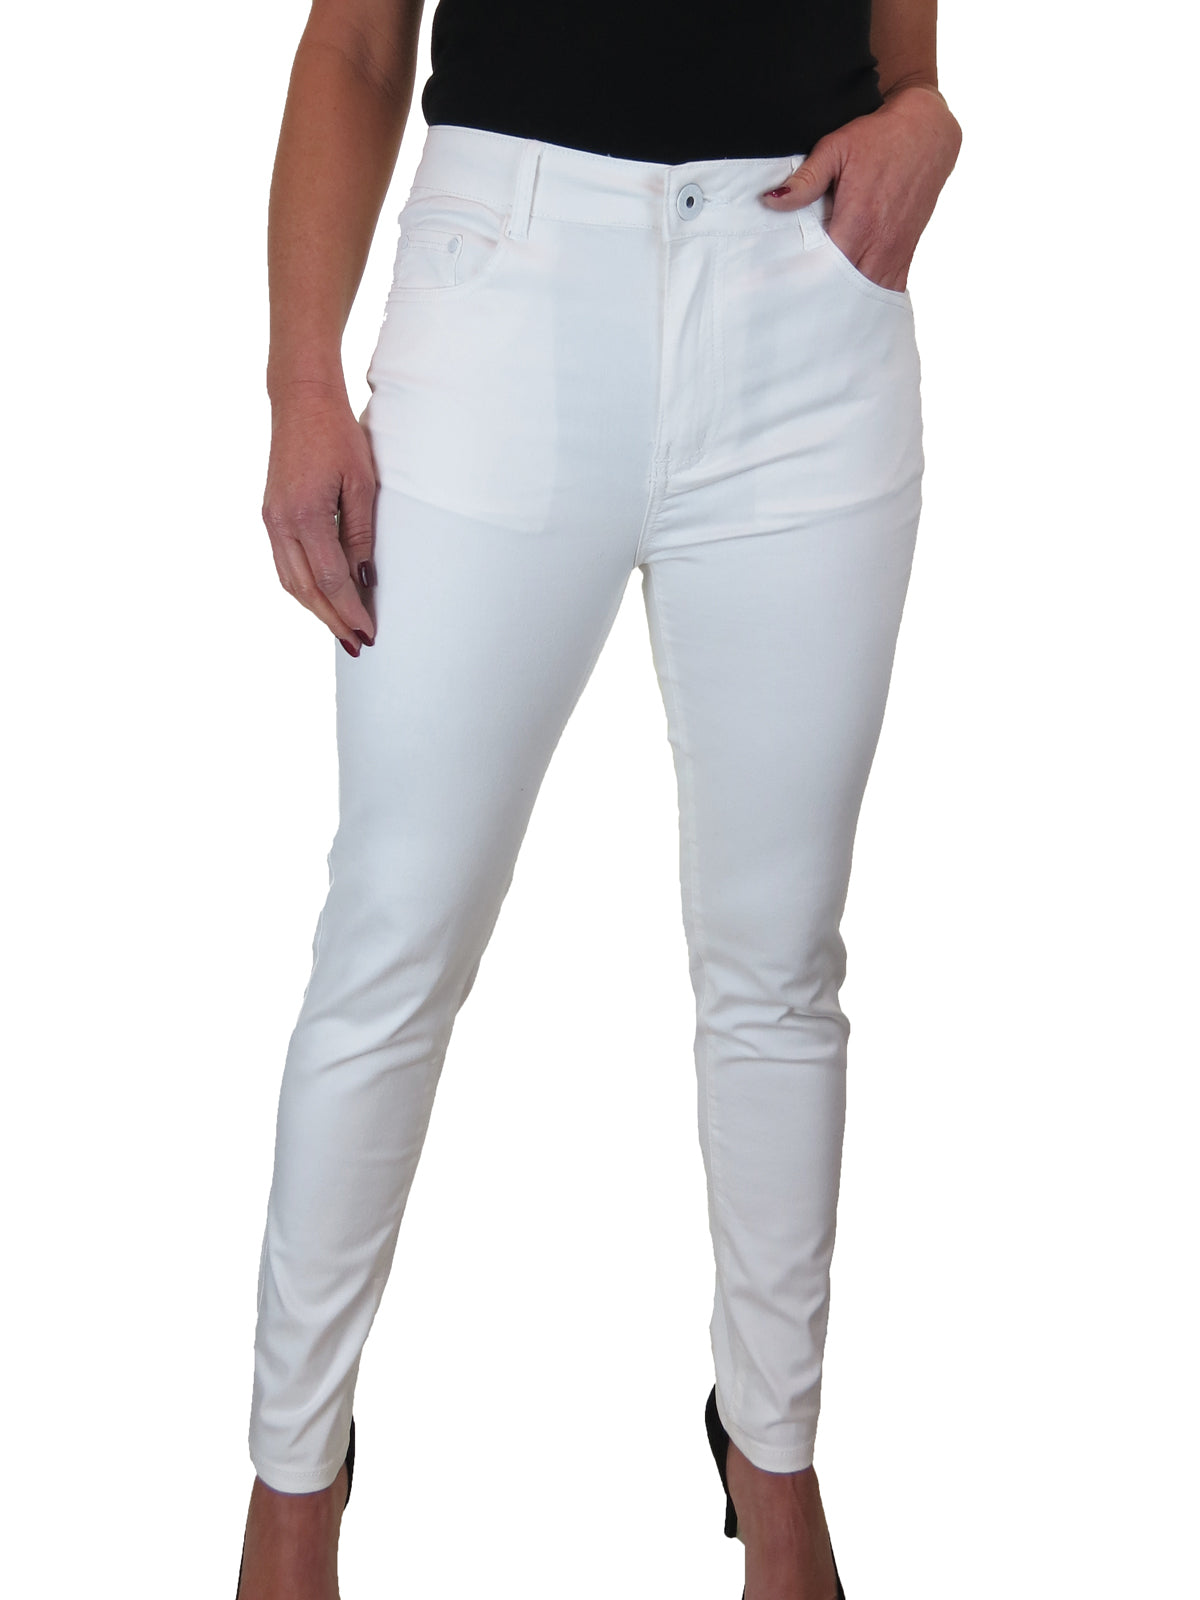 Women's High Waist Coloured Cotton Jeans White